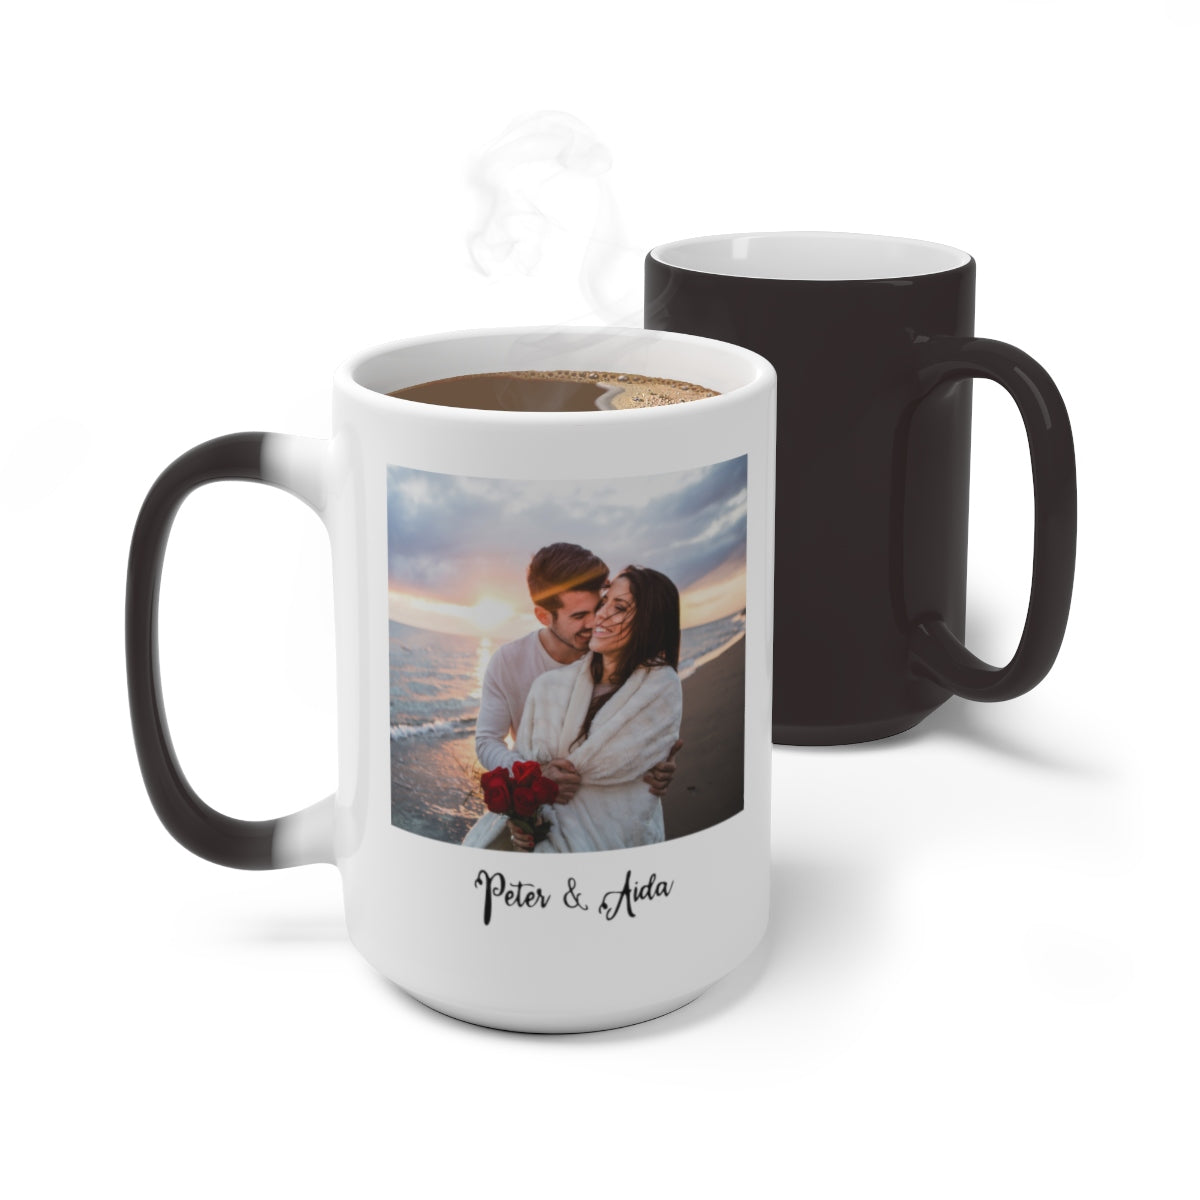 Car Personalized Monogram Coffee Mug Tea Cup Gift Idea for Men/Boys -  RANSALEX